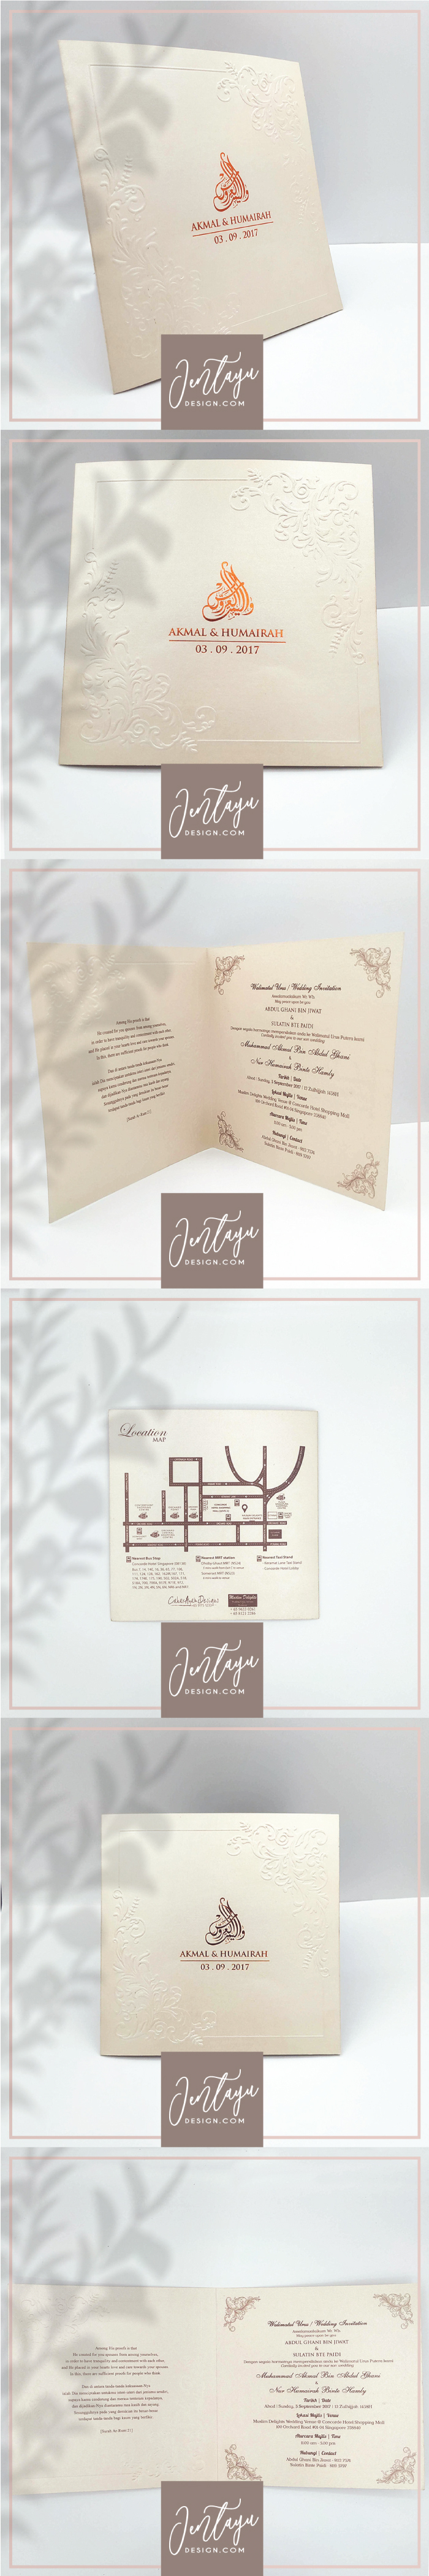 jentayu design kad kahwin formal vip royal berlipat metallic folded wedding cards square 6x6